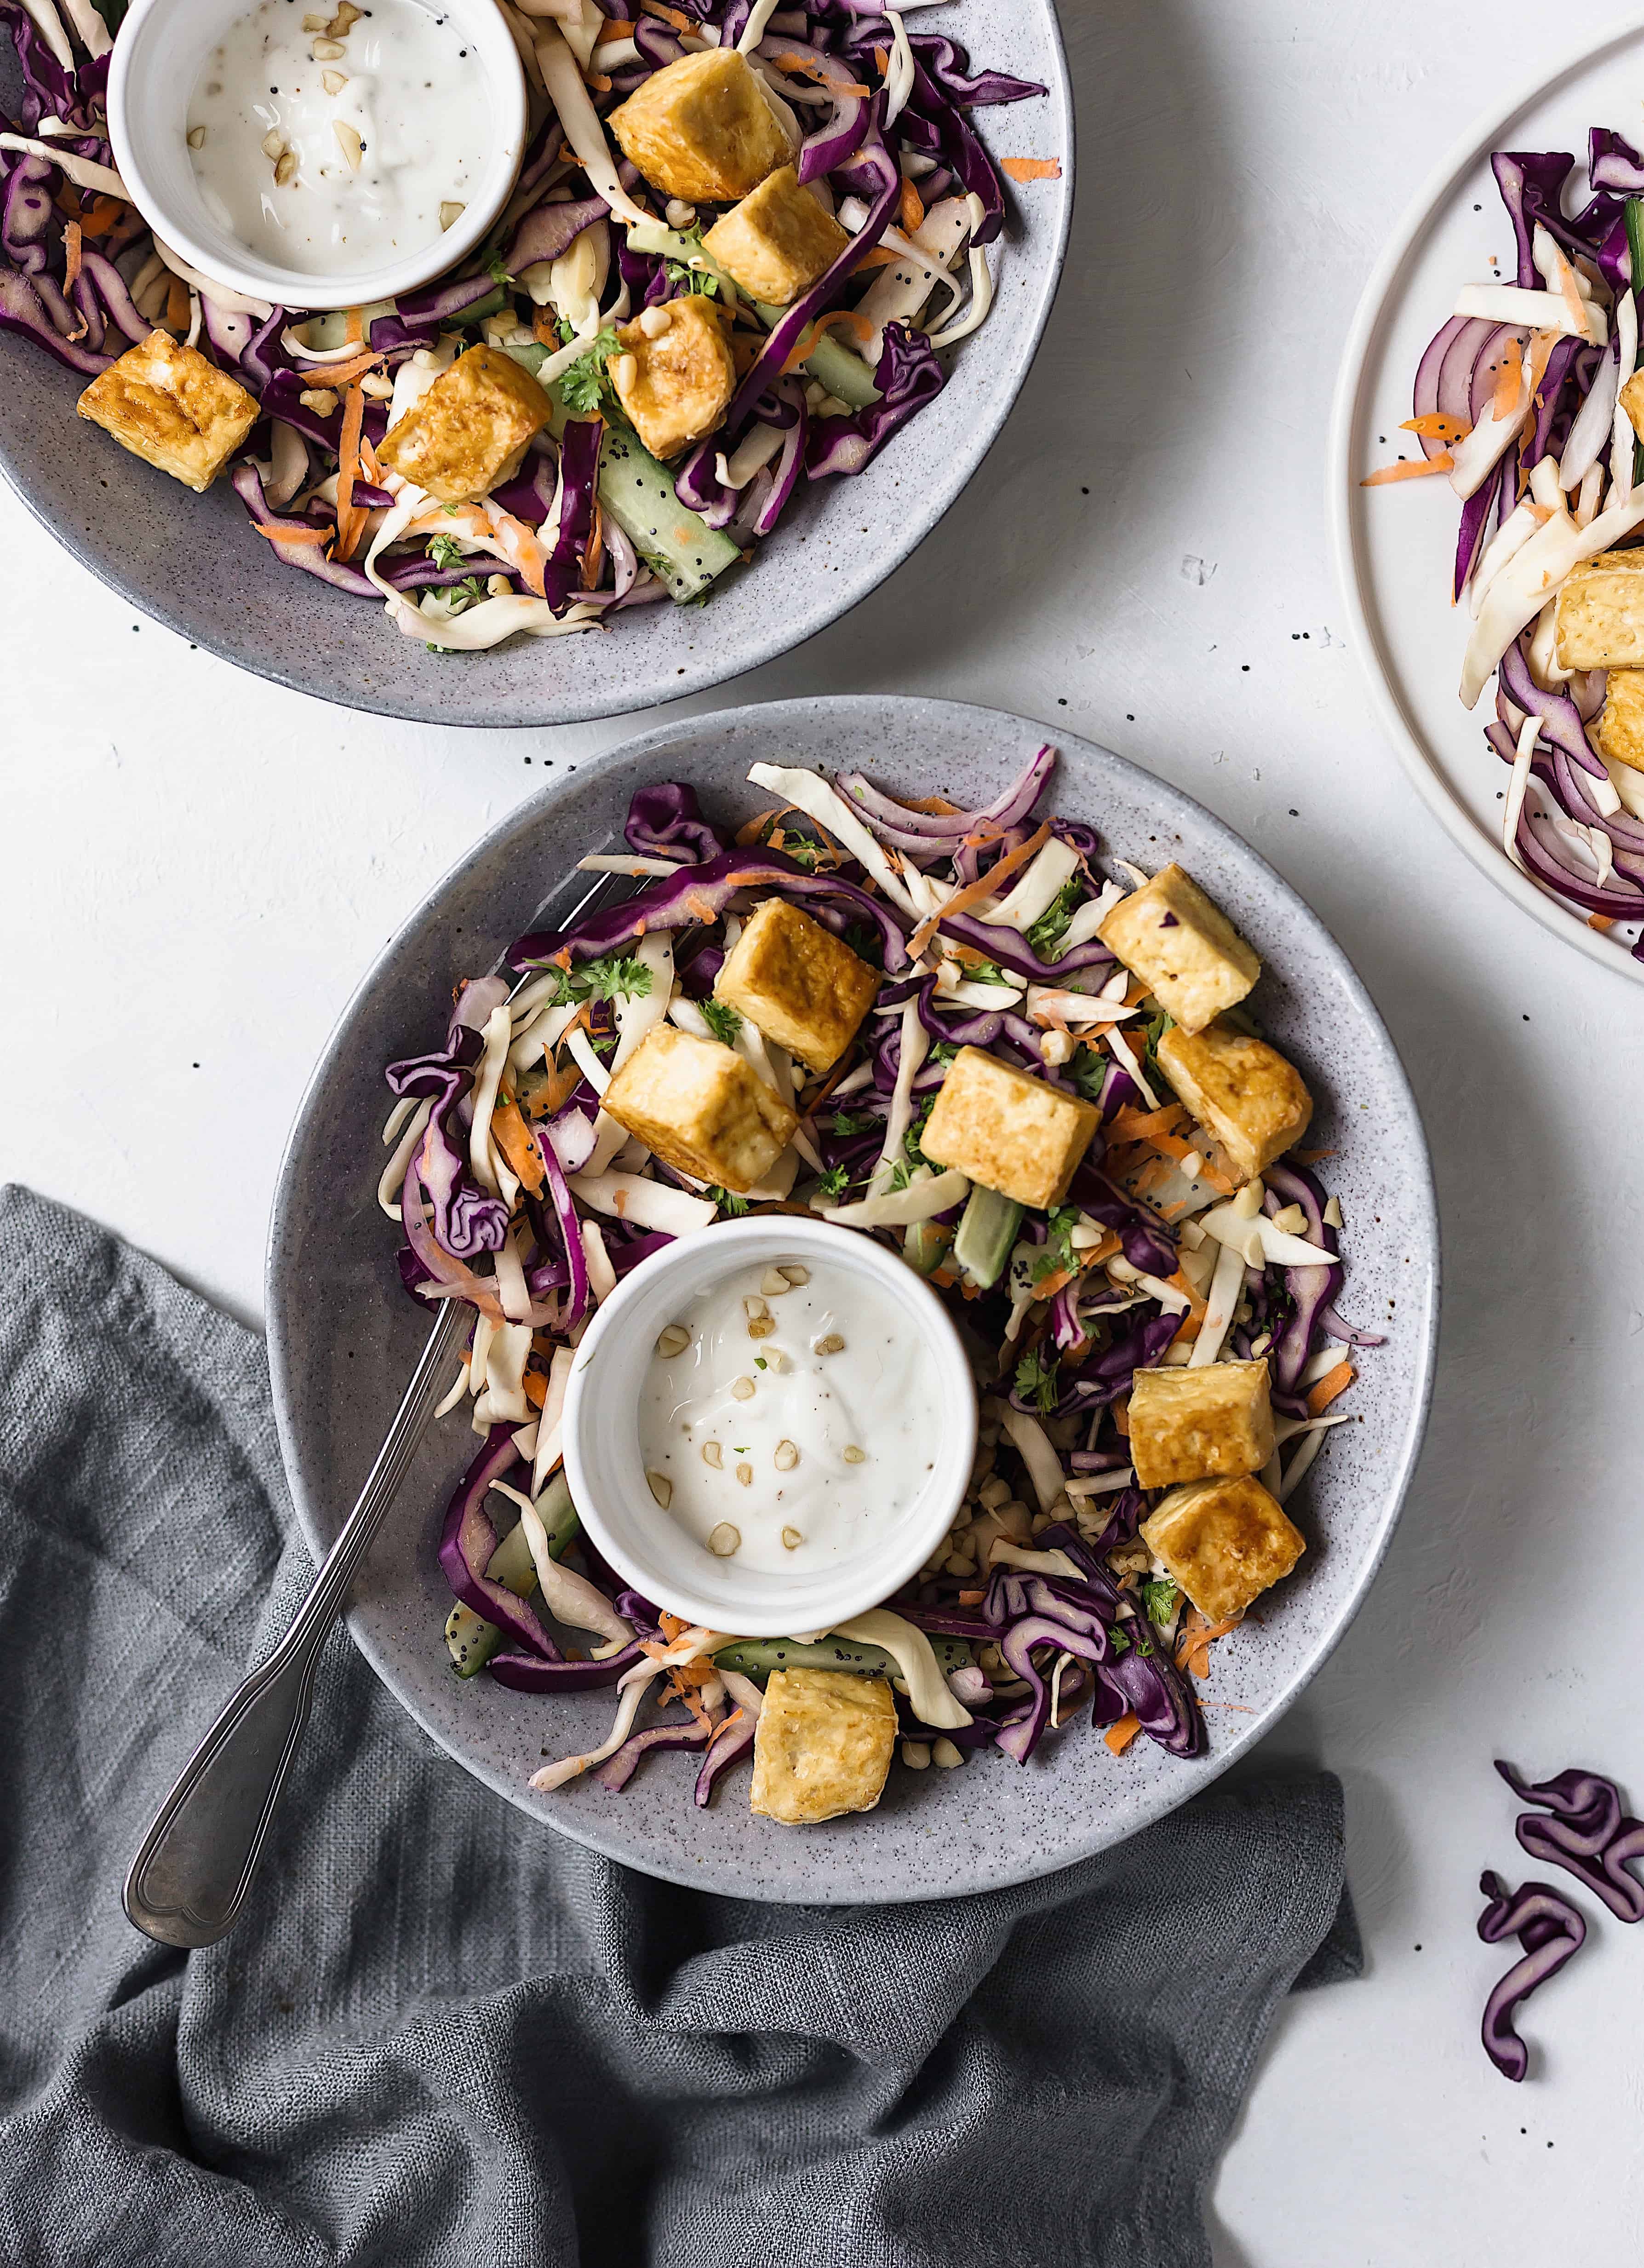 vegan coleslaw salad with cris[y tofu and garlic mayo